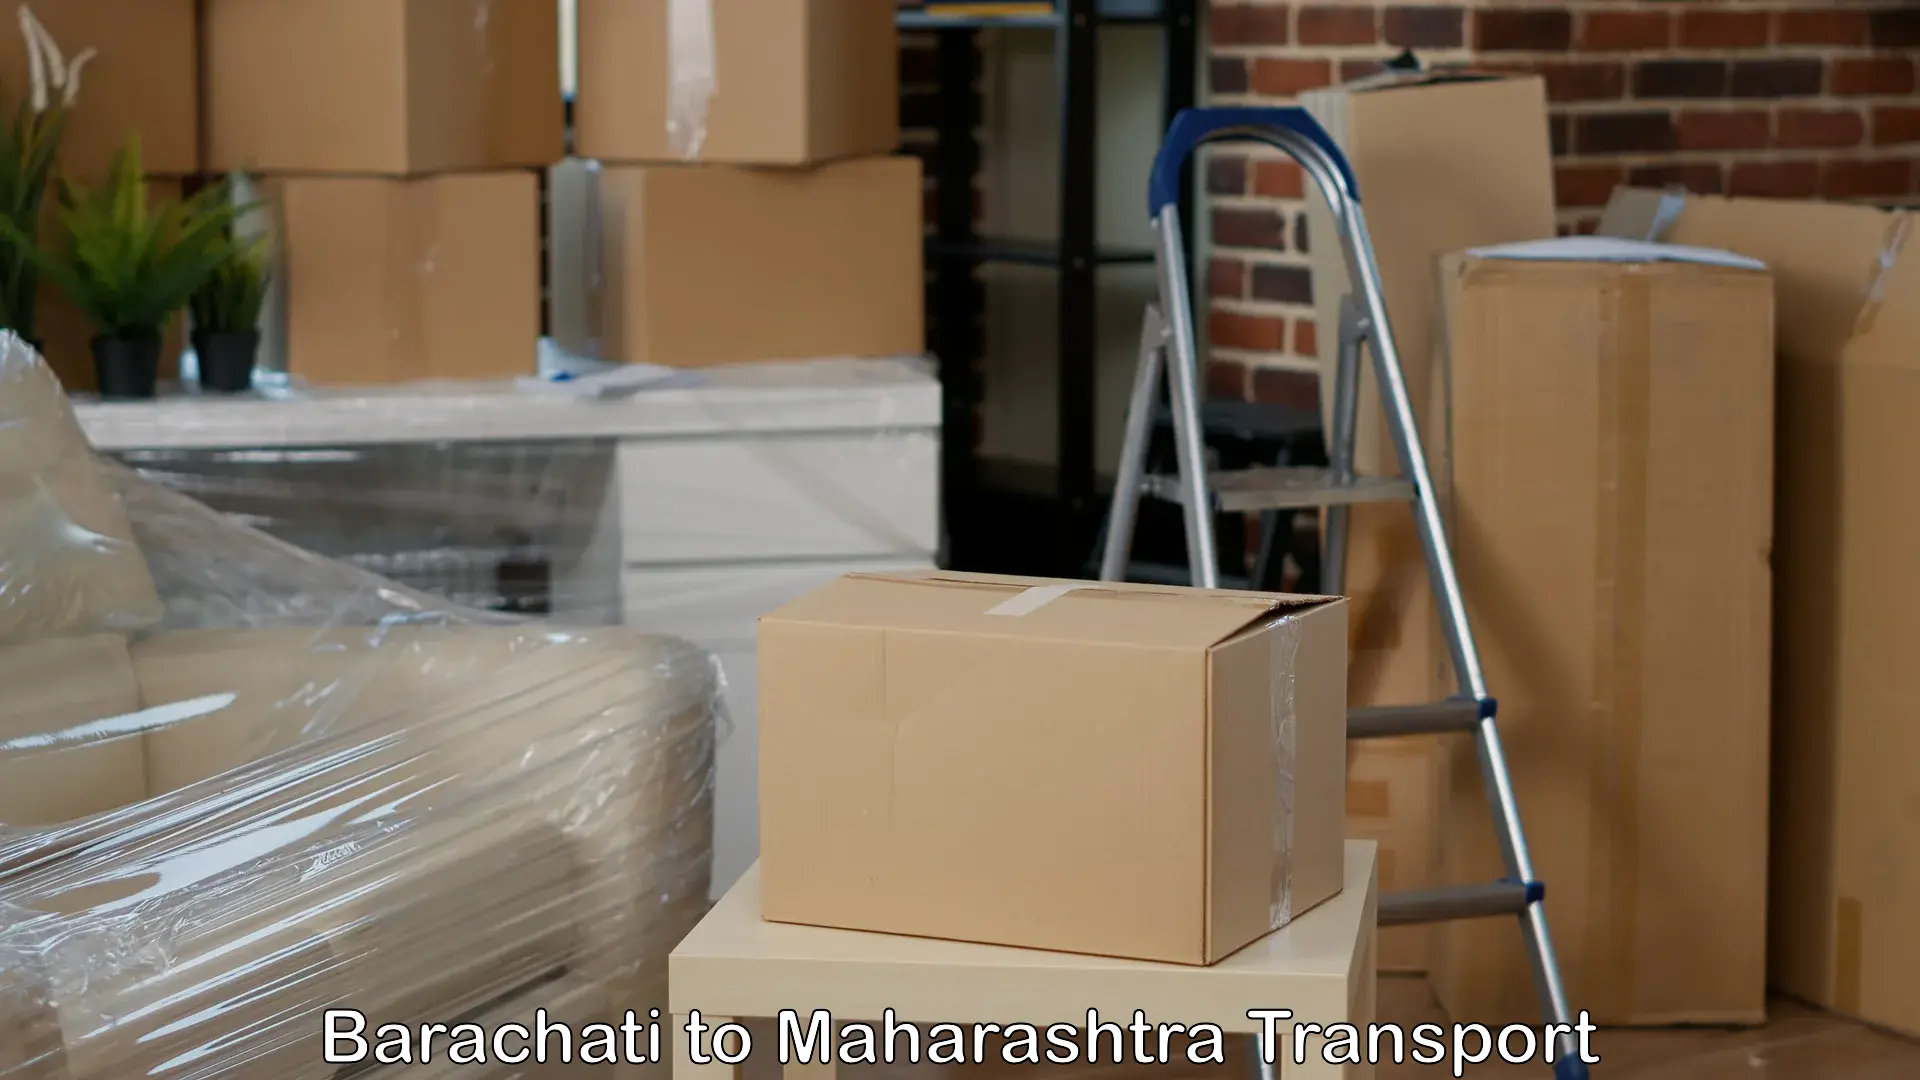 Shipping services in Barachati to Maharashtra